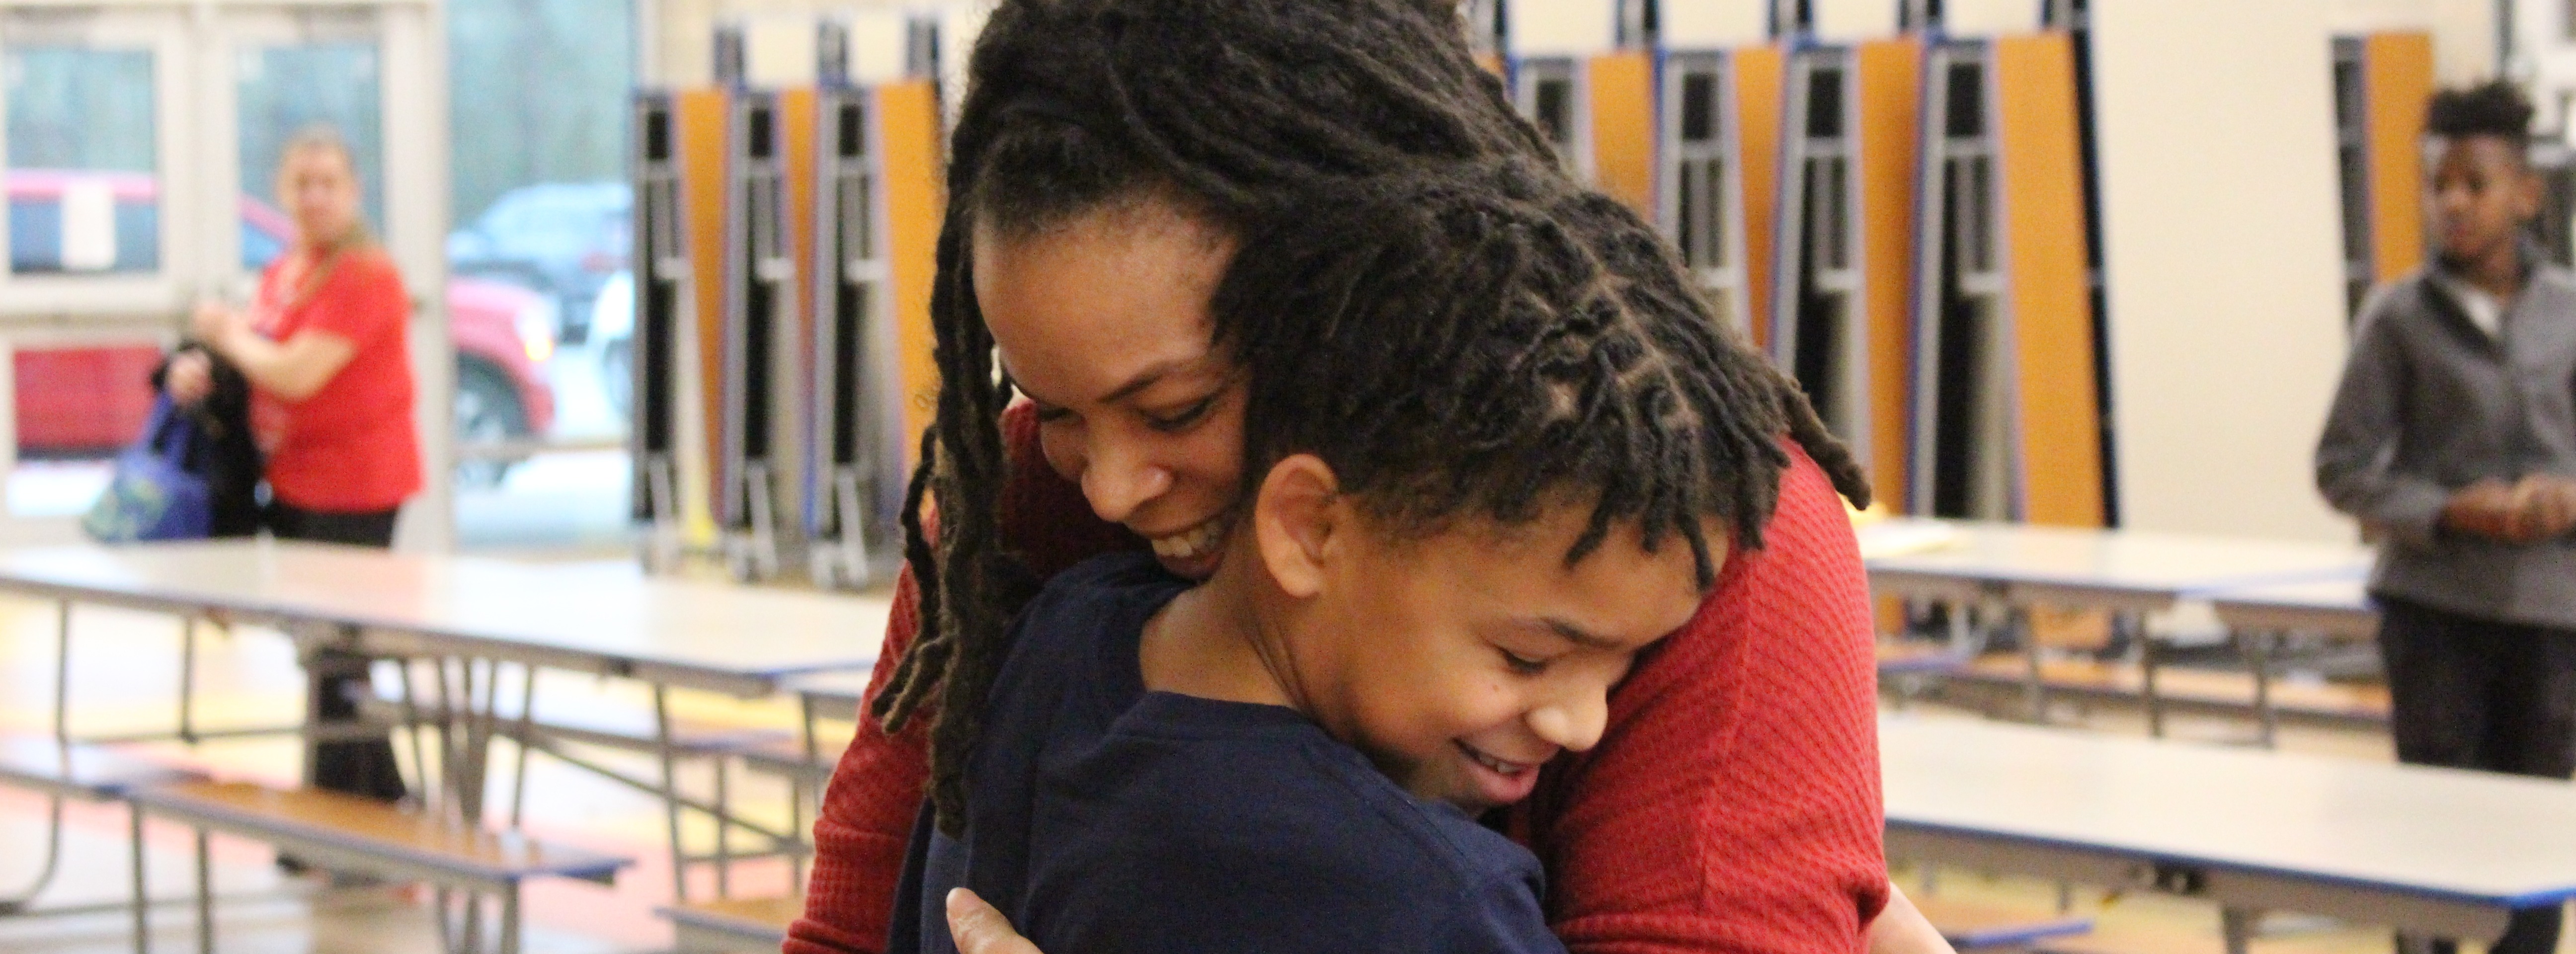 Spelling Bee winner at Northside hugging his mother after winning